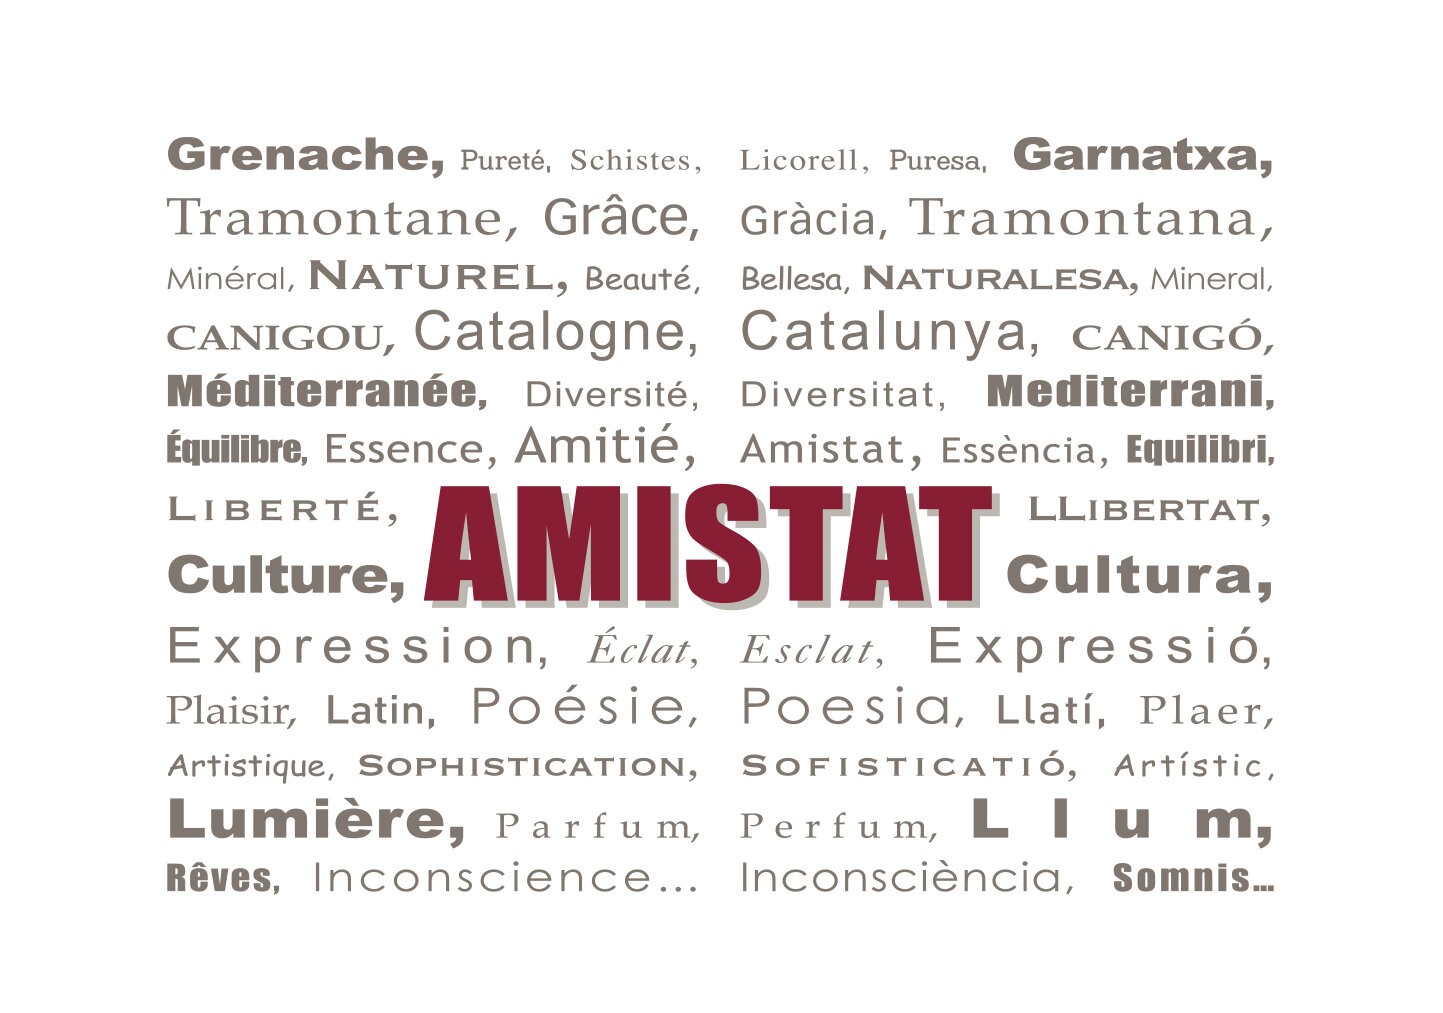 Amistat